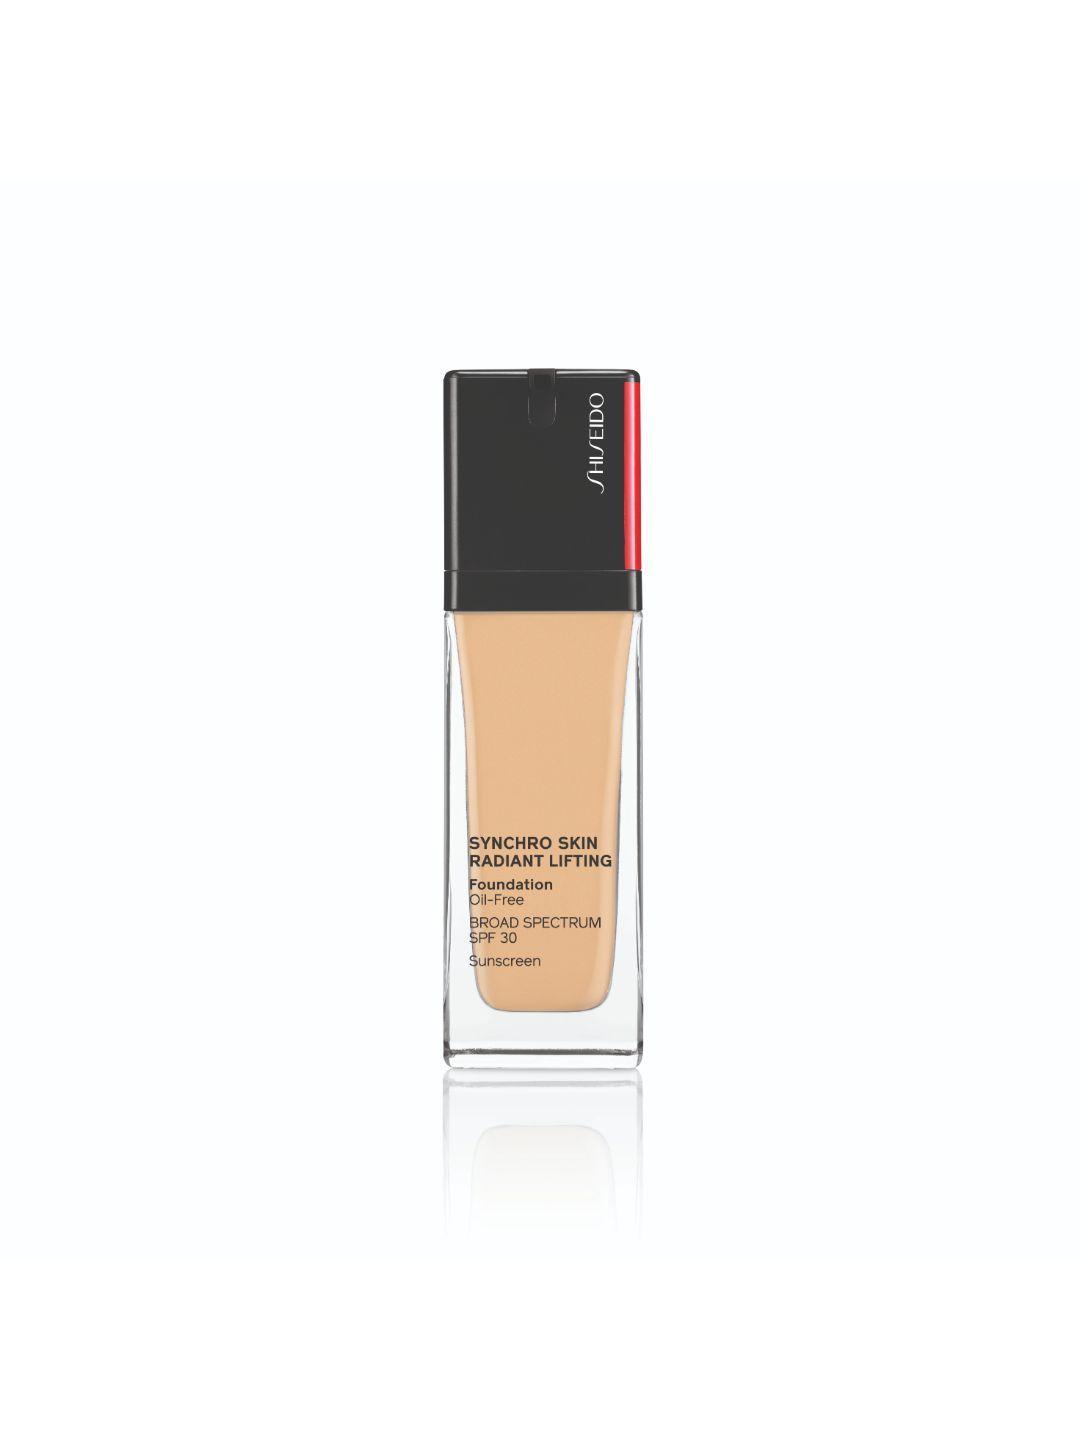 shiseido synchro skin radiant lifting spf 30 foundation 30 ml - shell 160